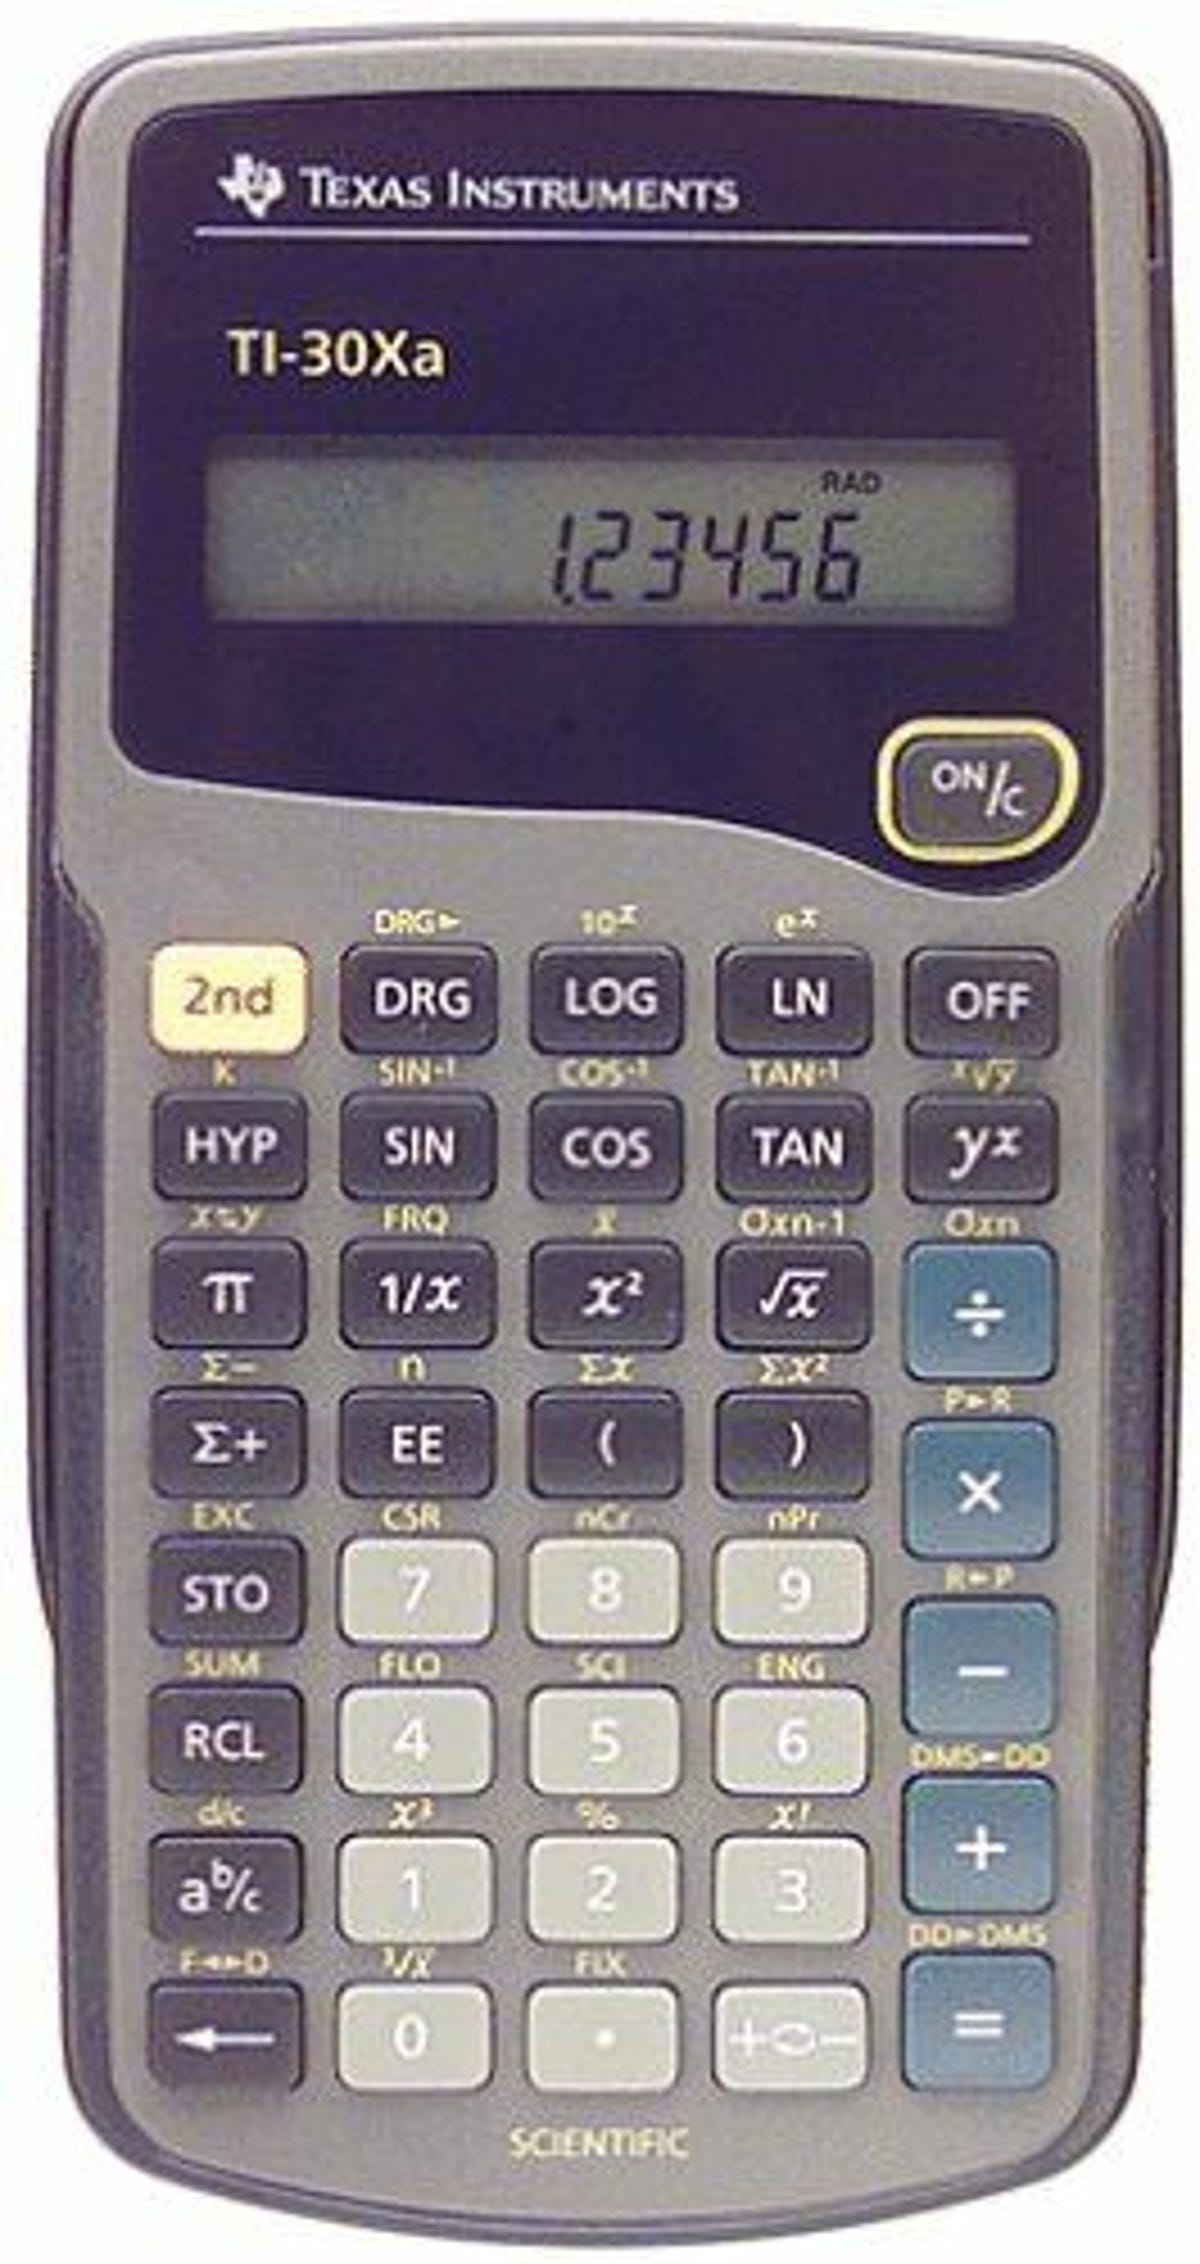 1-calculator.jpg